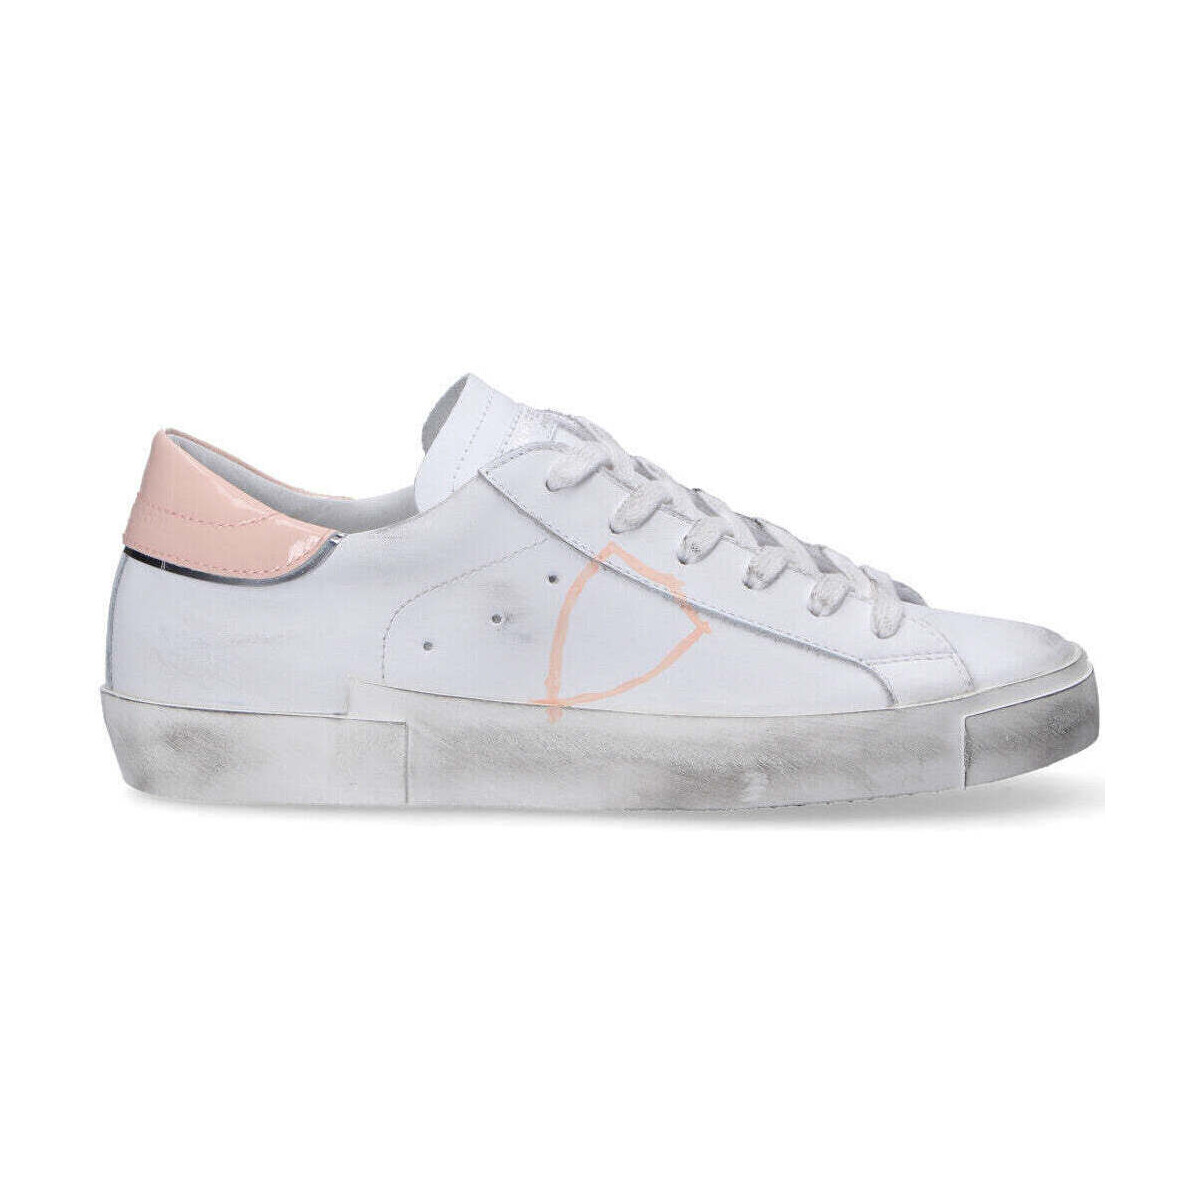 Scarpe Donna Sneakers basse Philippe Model sneakers PRSX bianco rosa Bianco